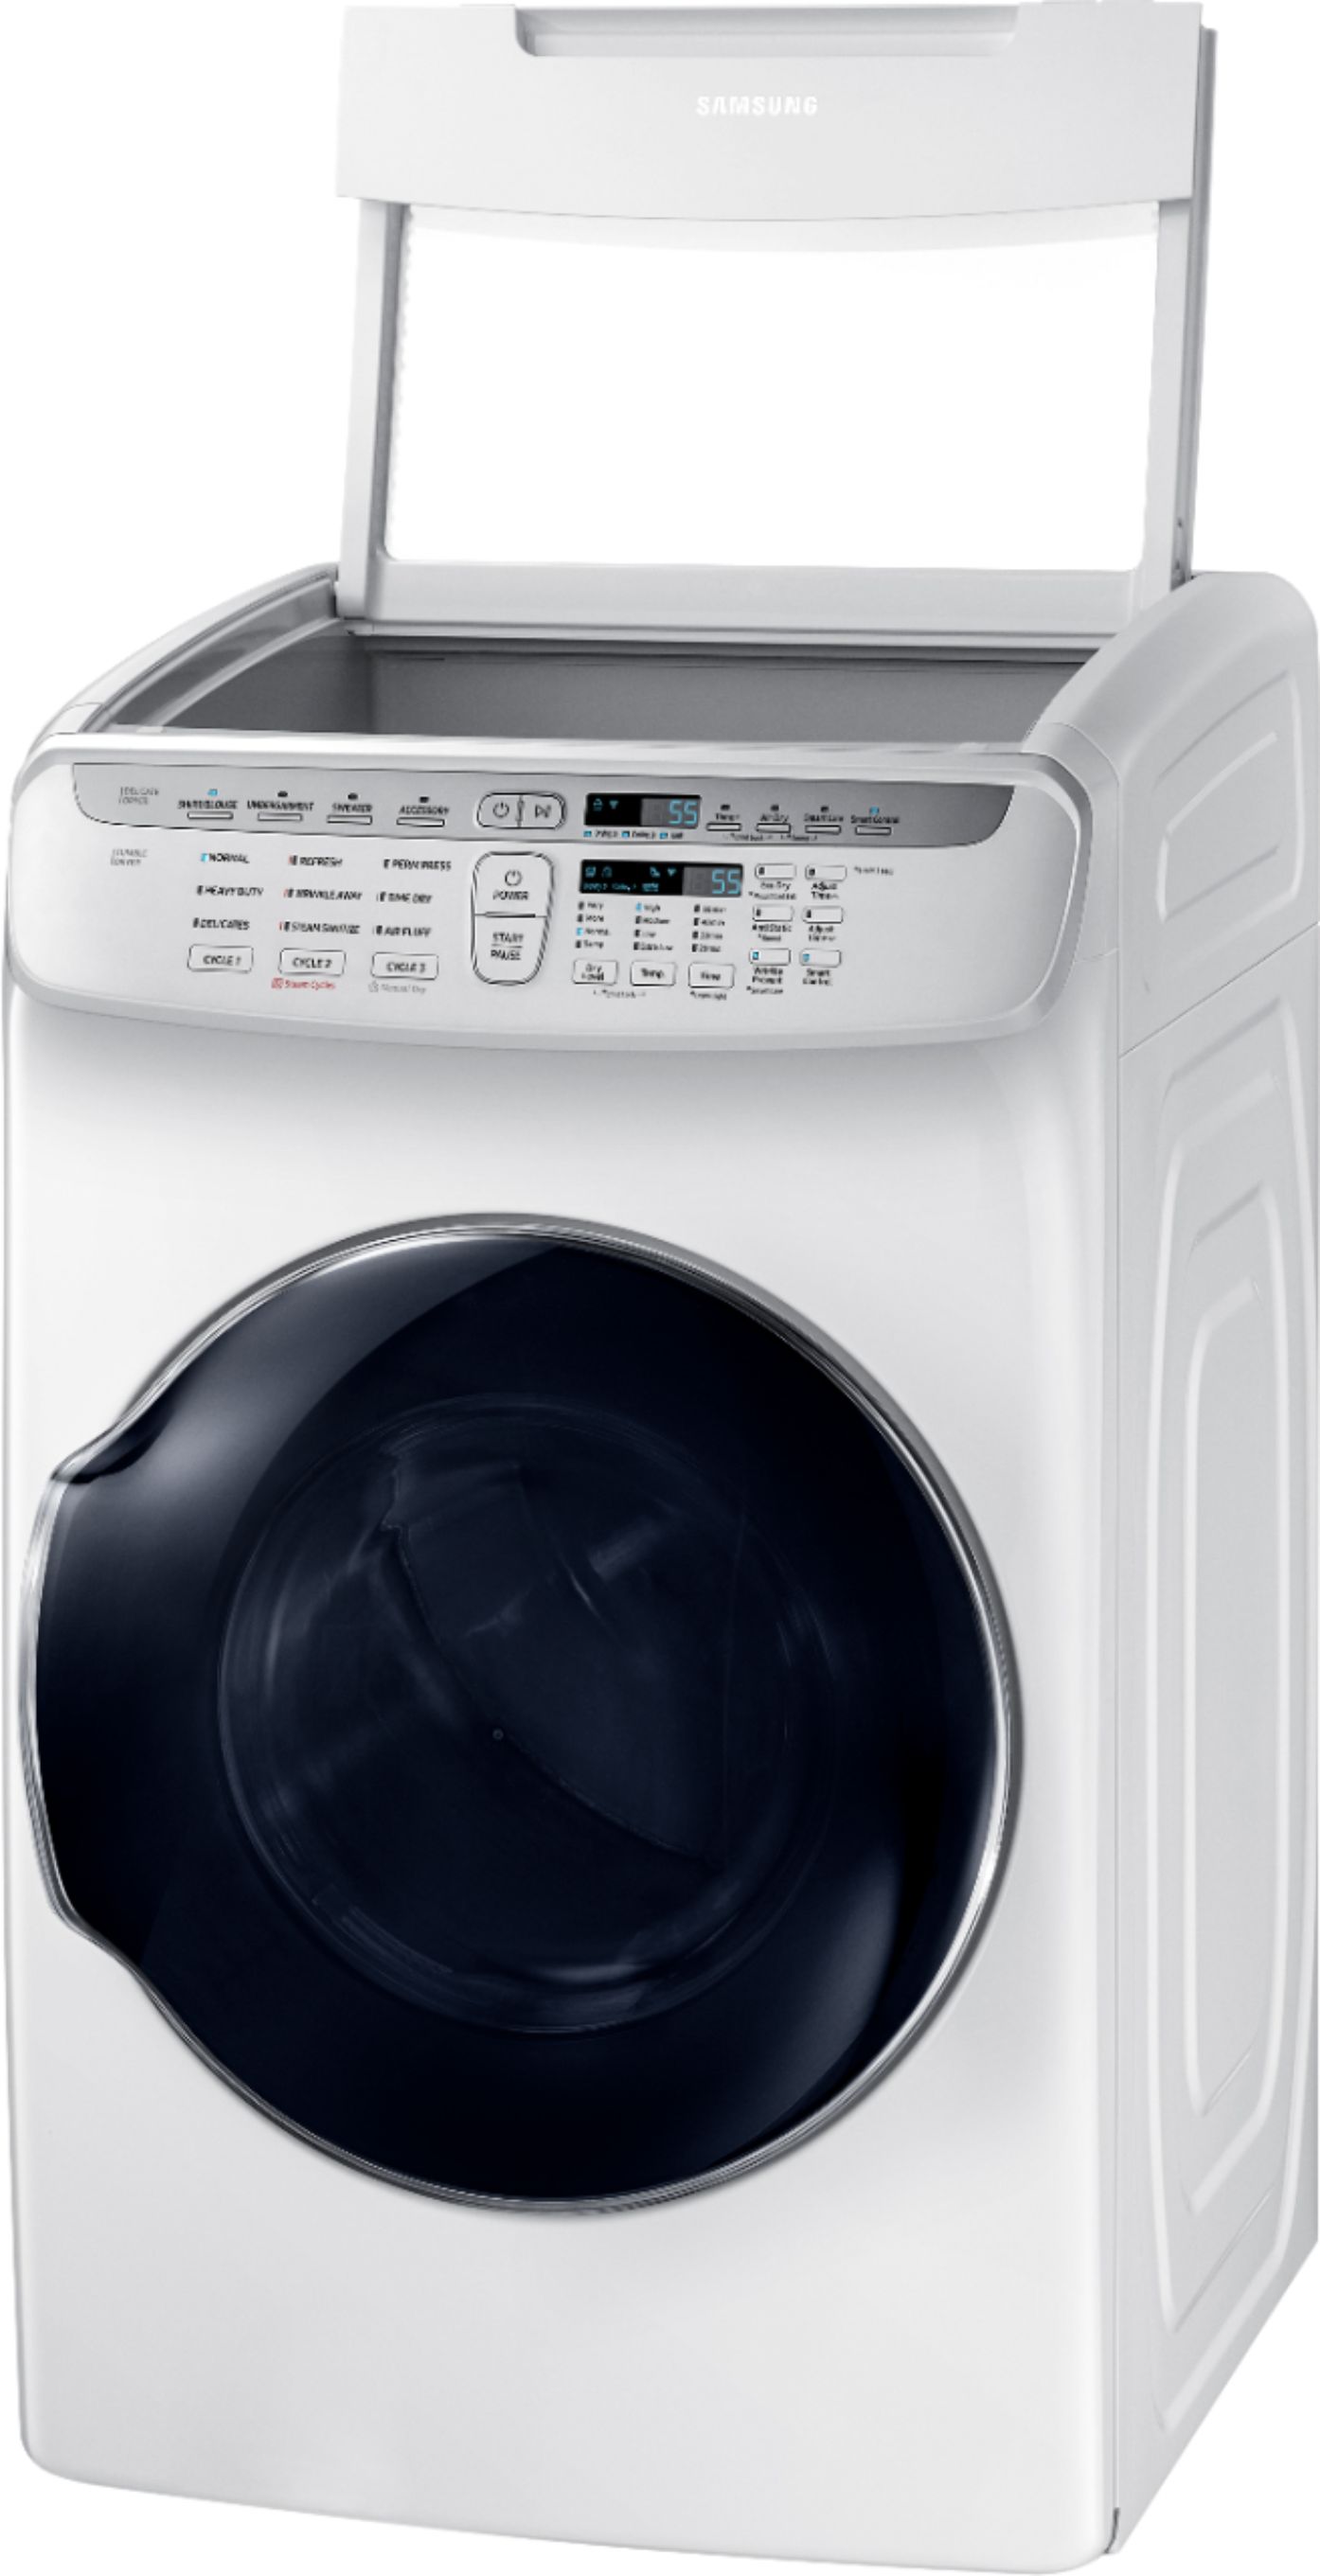 DVG55M9600W by Samsung - 7.5 cu. ft. Smart Gas Dryer with FlexDry™ in White